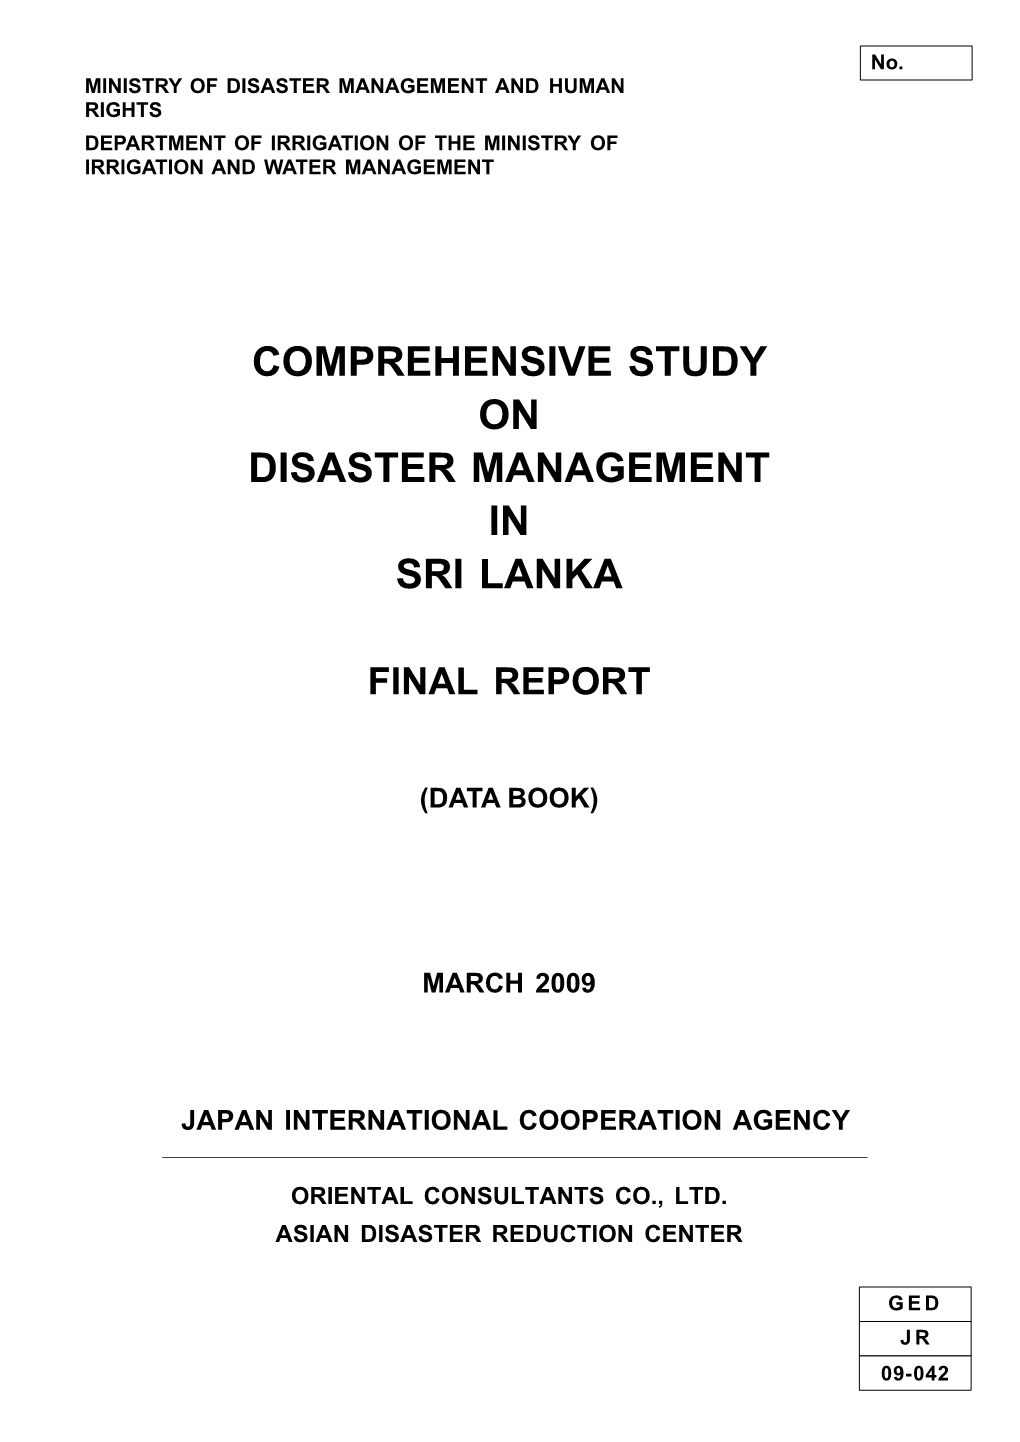 Comprehensive Study on Disaster Management in Sri Lanka